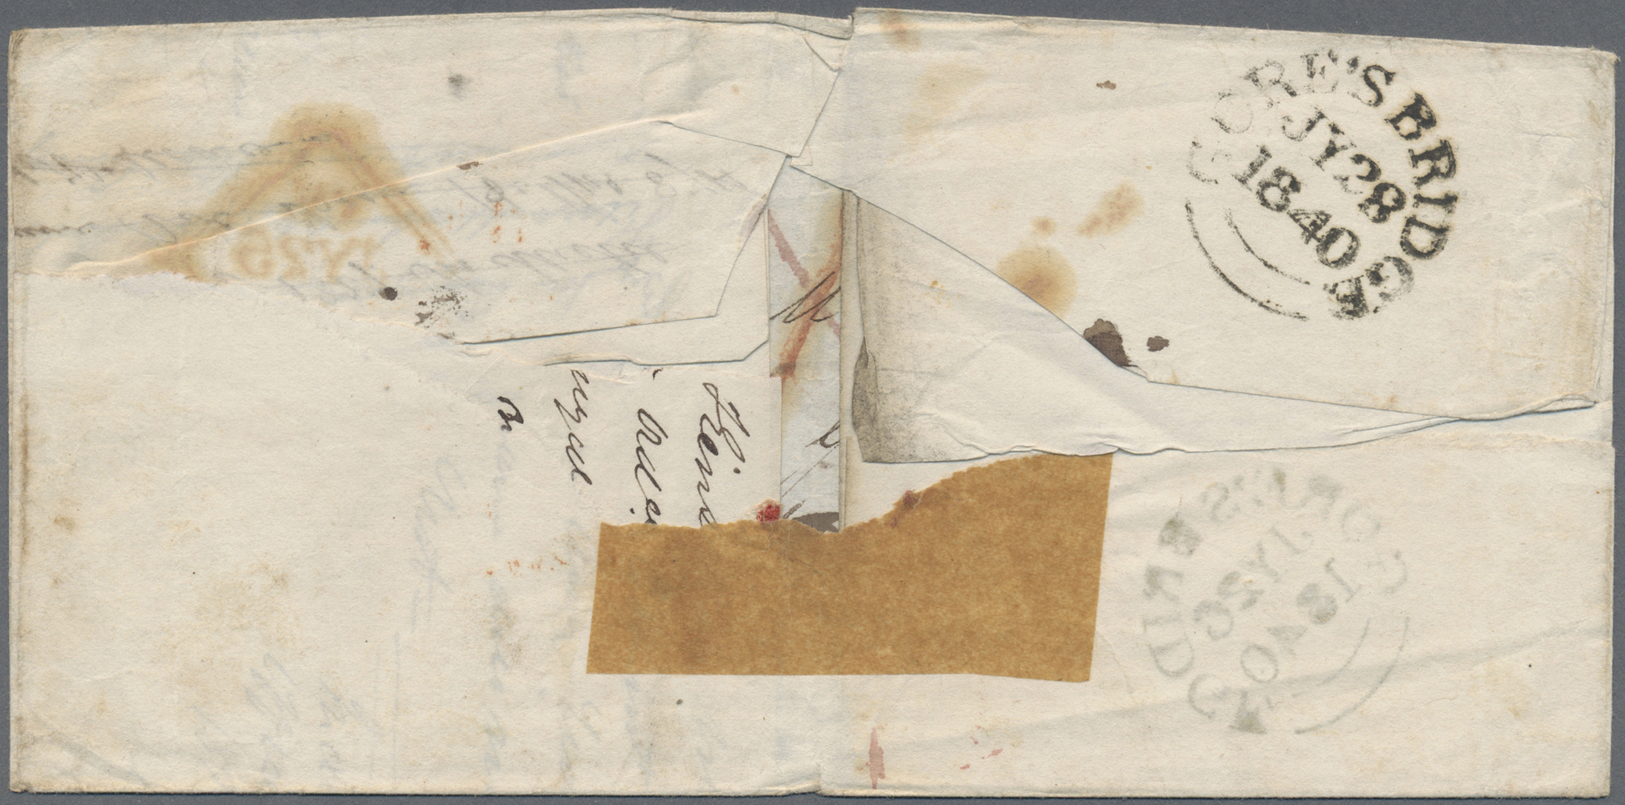 Br Irland - Vorphilatelie: 1840. Stampless Envelope (folds And Tears) Addressed To London Cancelled By Gores Brid - Préphilatélie